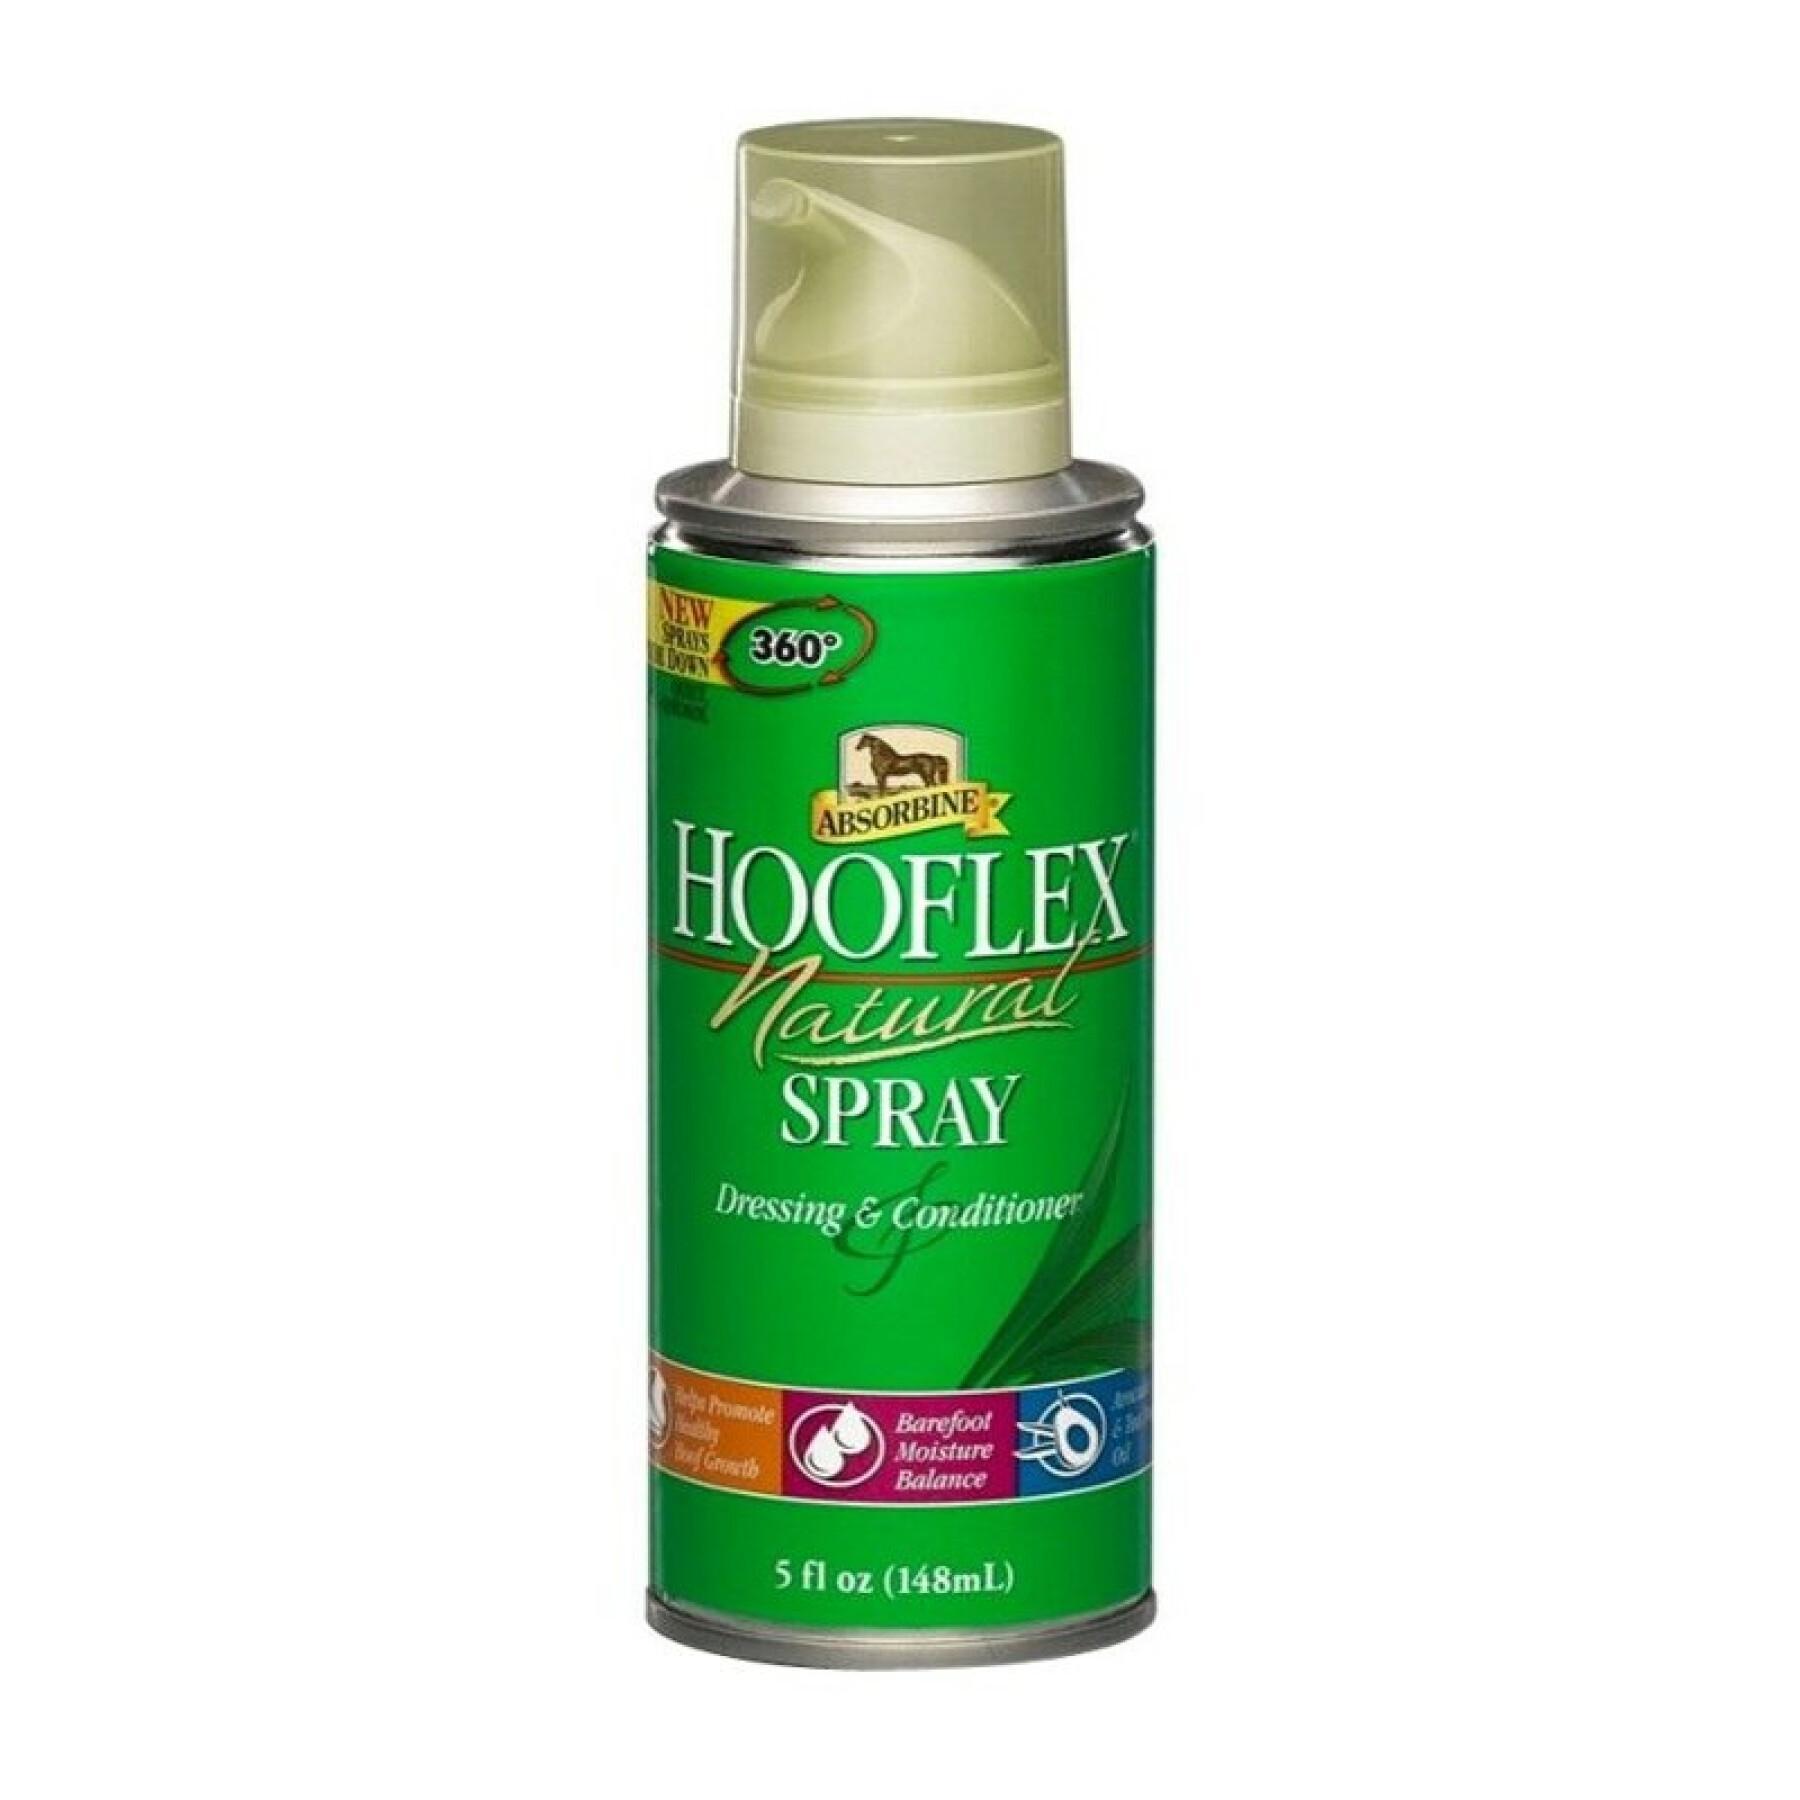 Spray natural Absorbine Hooflex